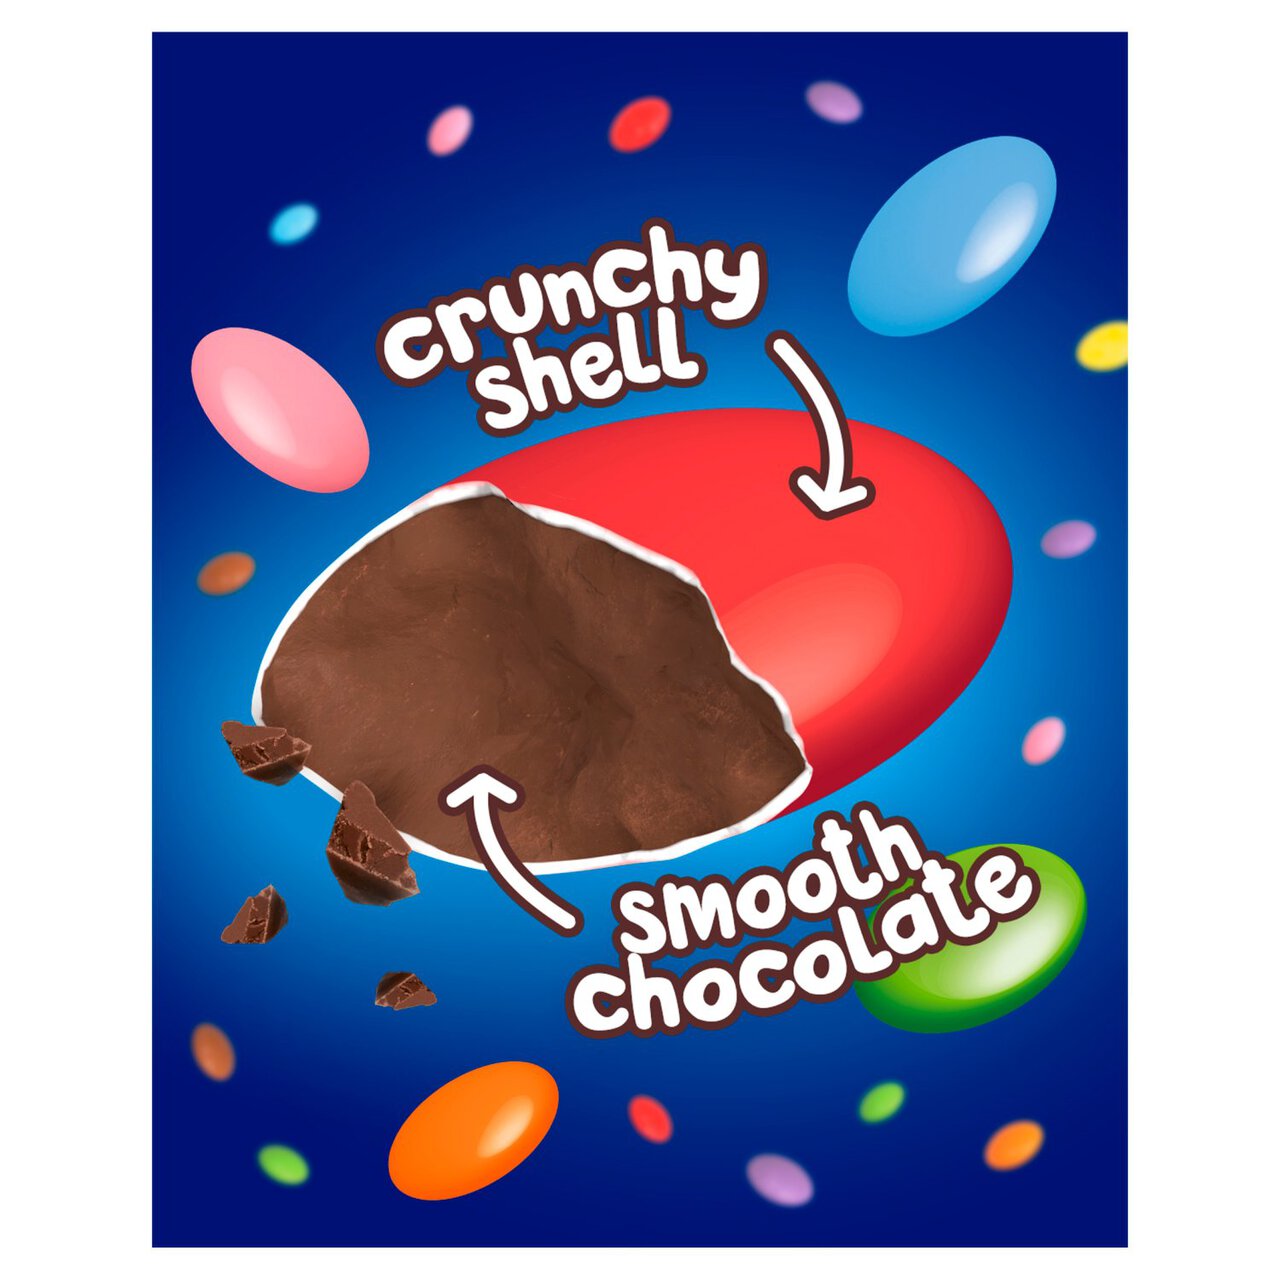 Smarties Milk Chocolate Sweets Sharing Bag 105g